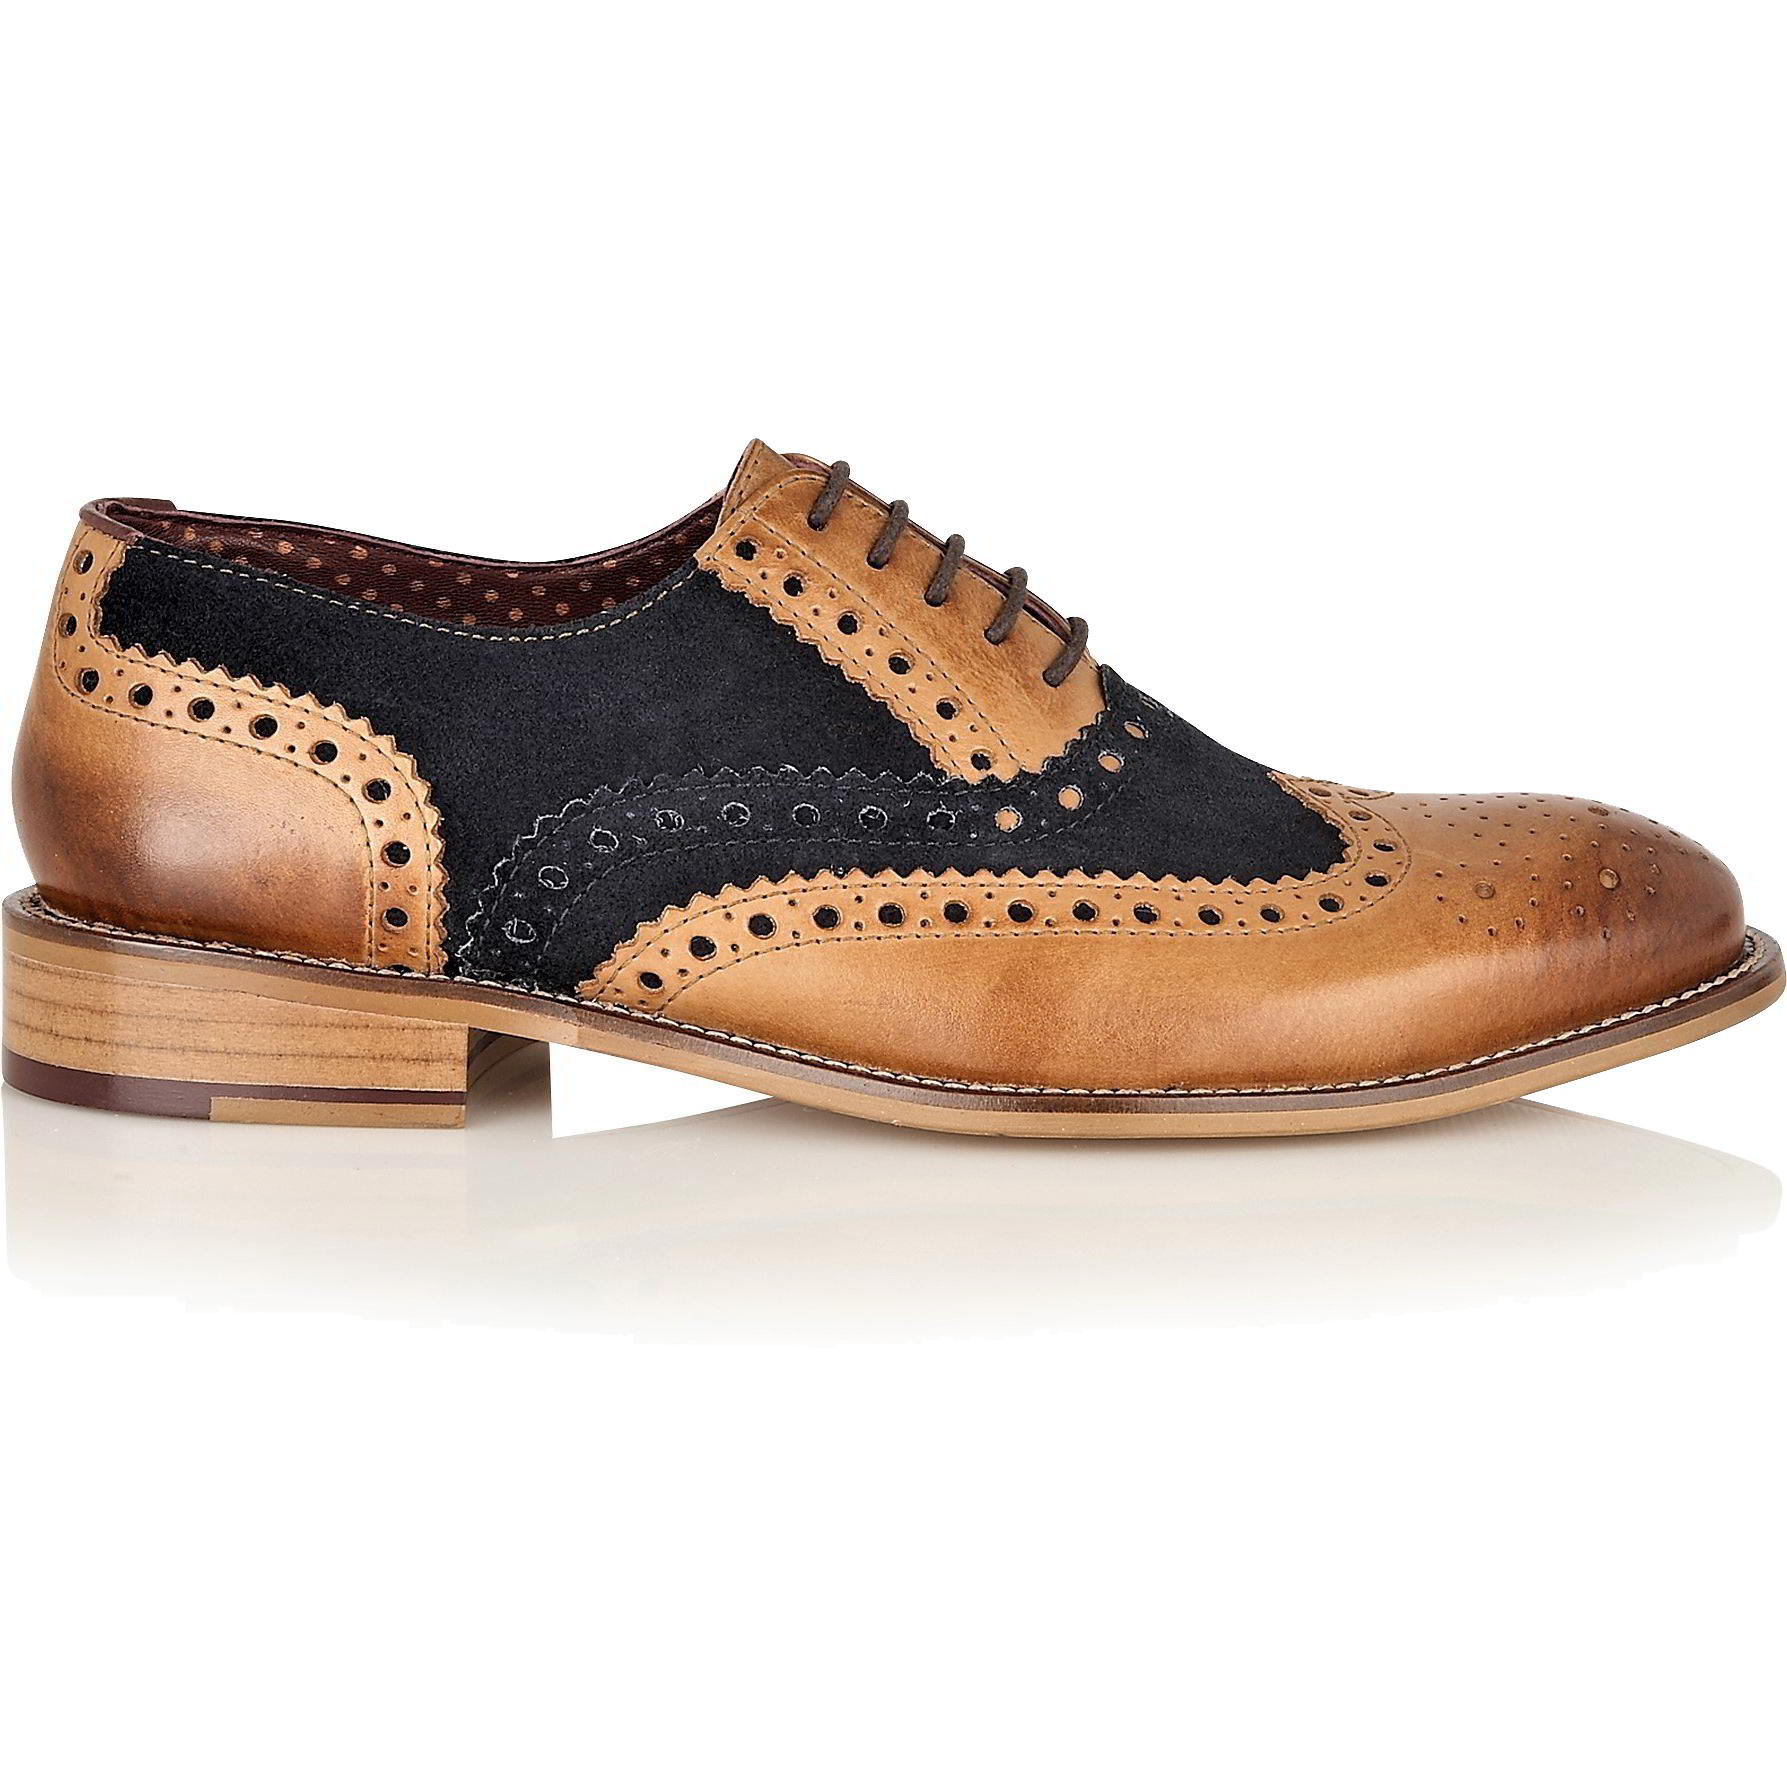 London Brogues Men's Gatsby Leather Wingtip Brogue Shoes - UK 8